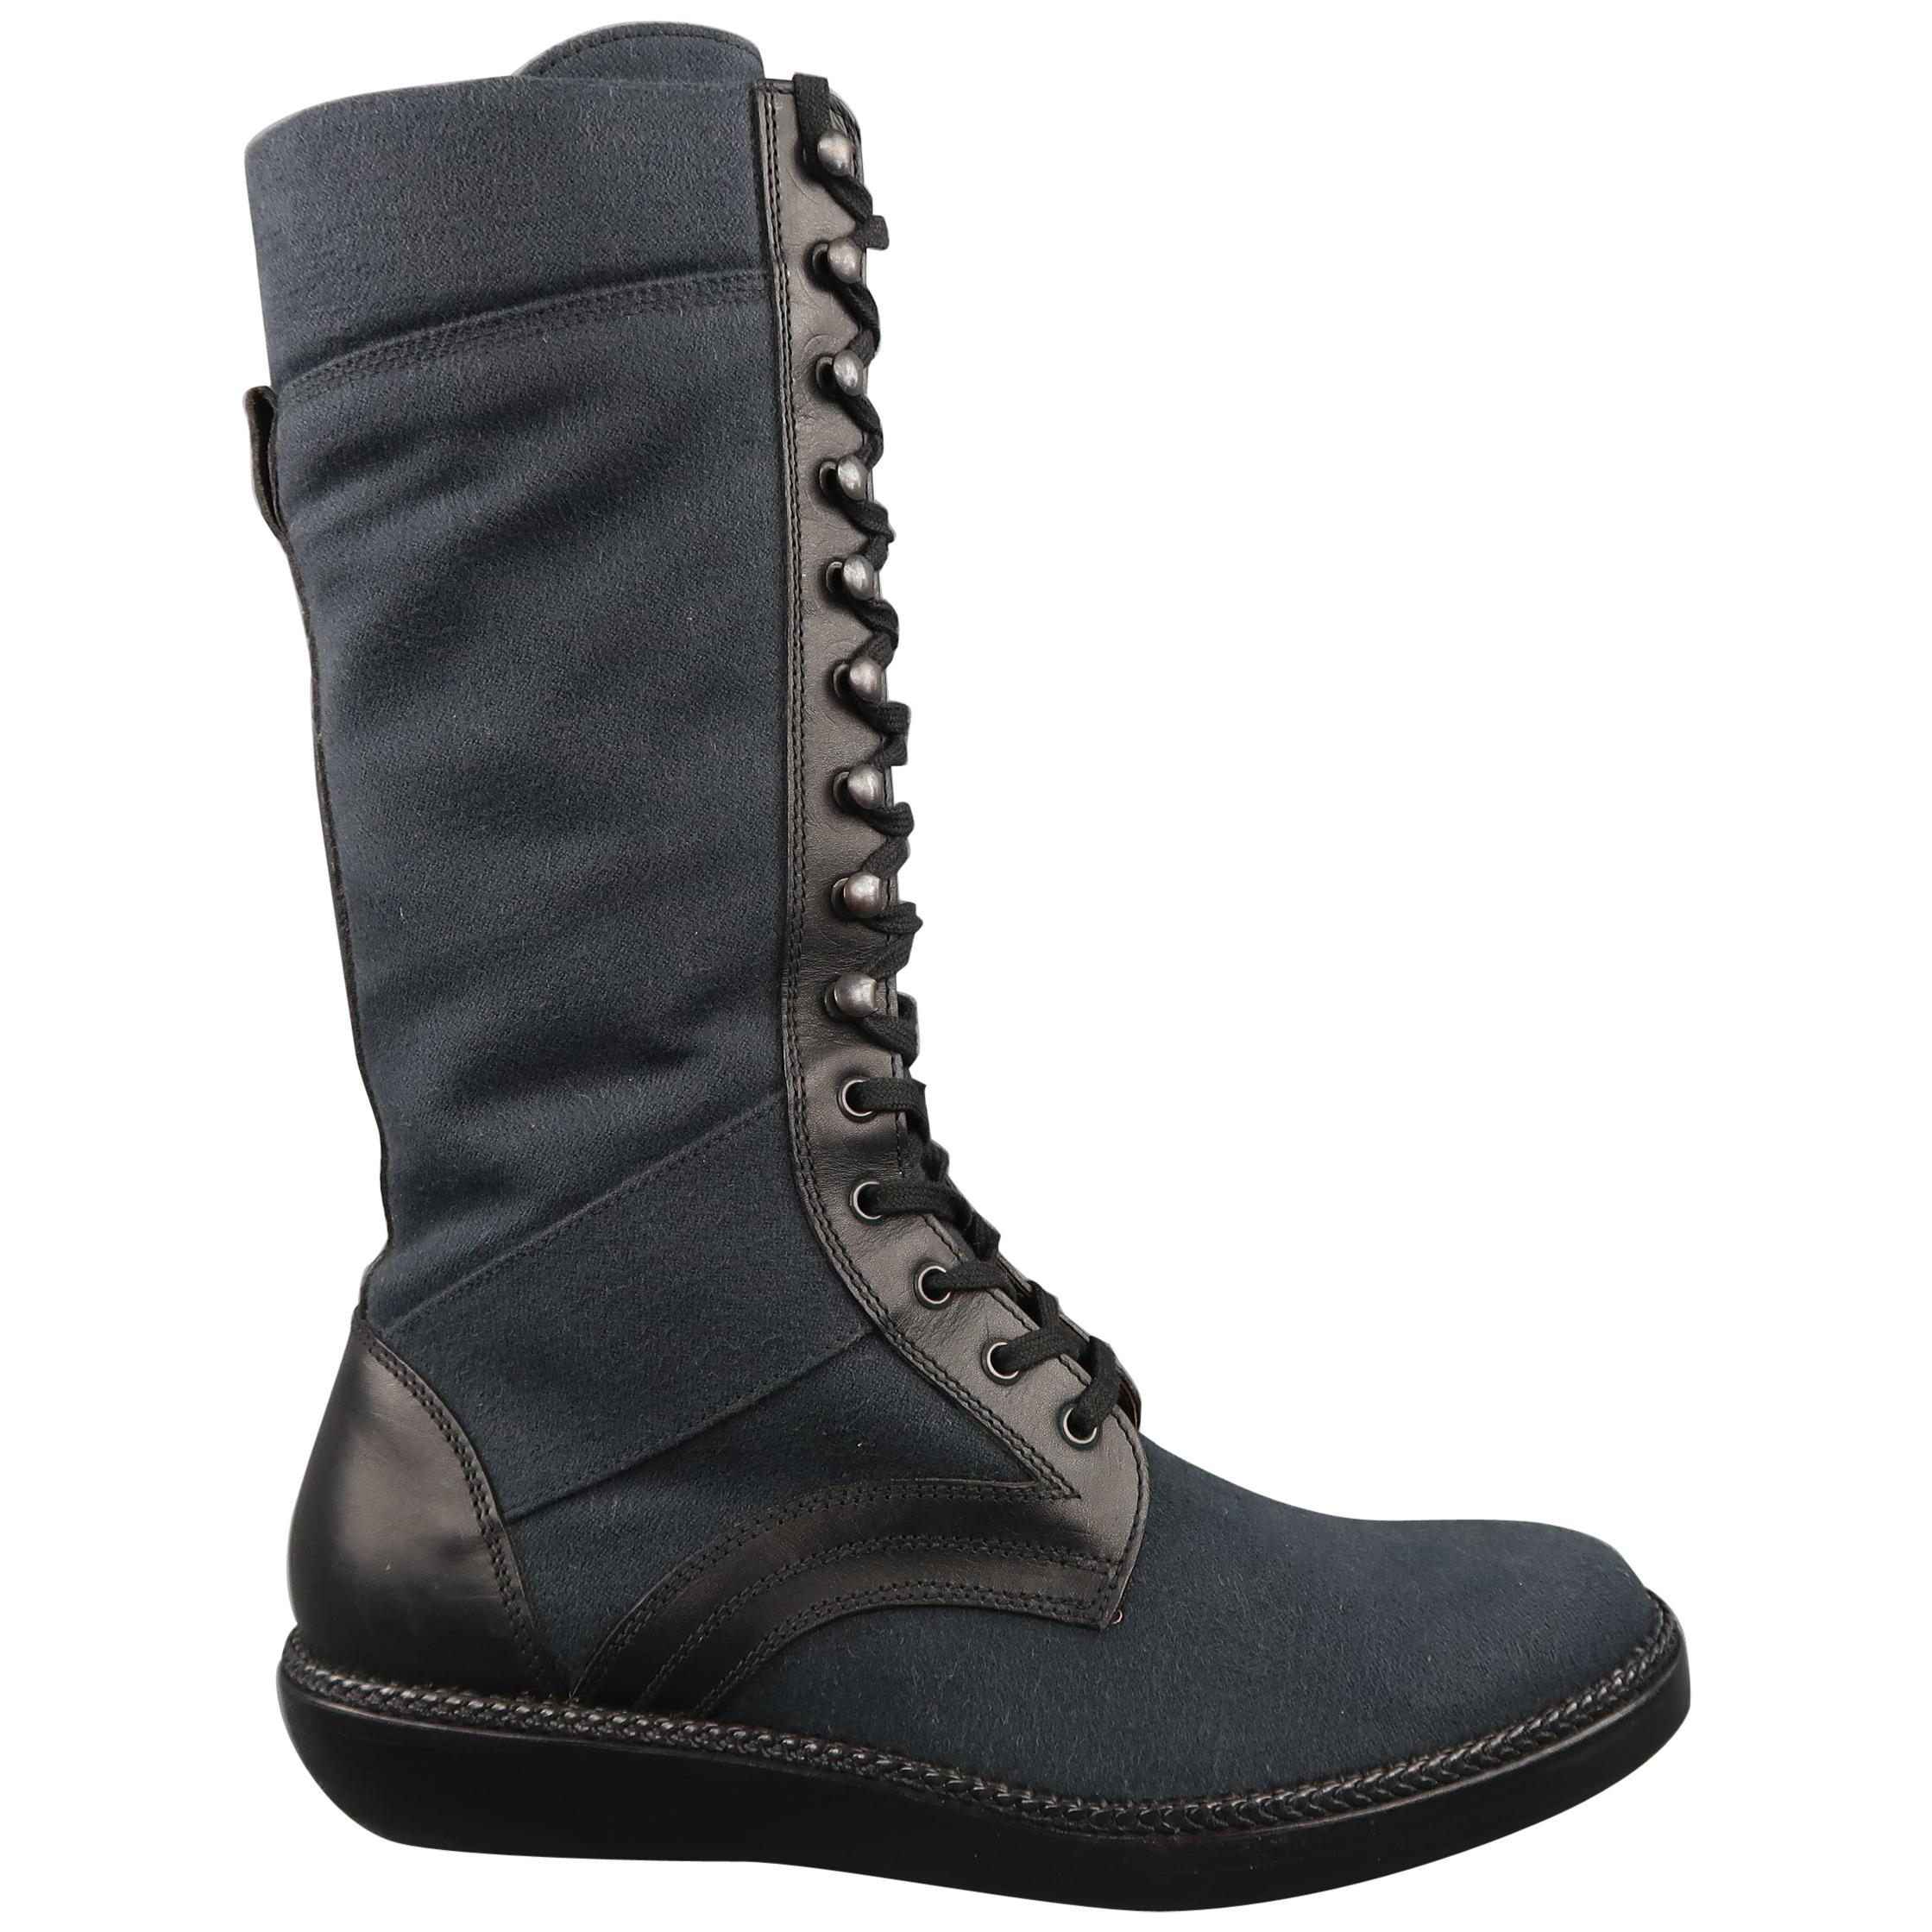 Men's LANVIN Size 9 Navy & Black Canvas & Leather Calf High Boots